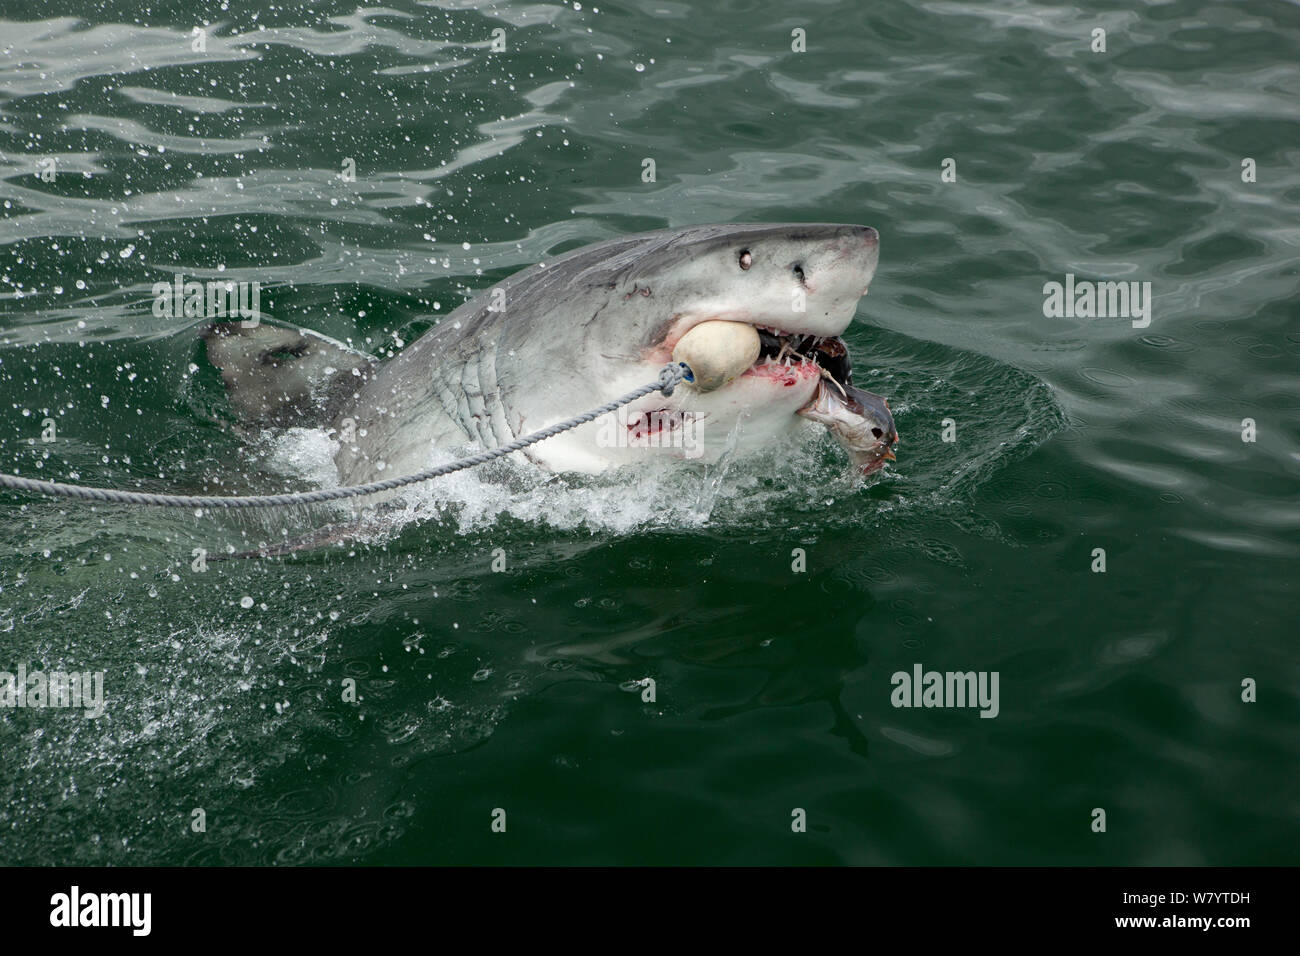 Gran tiburón blanco (Carcharodon carcharias) morder señuelo usado por jaula viaje de buceo, cerca de Gansbaai, Sudáfrica, en diciembre. Foto de stock